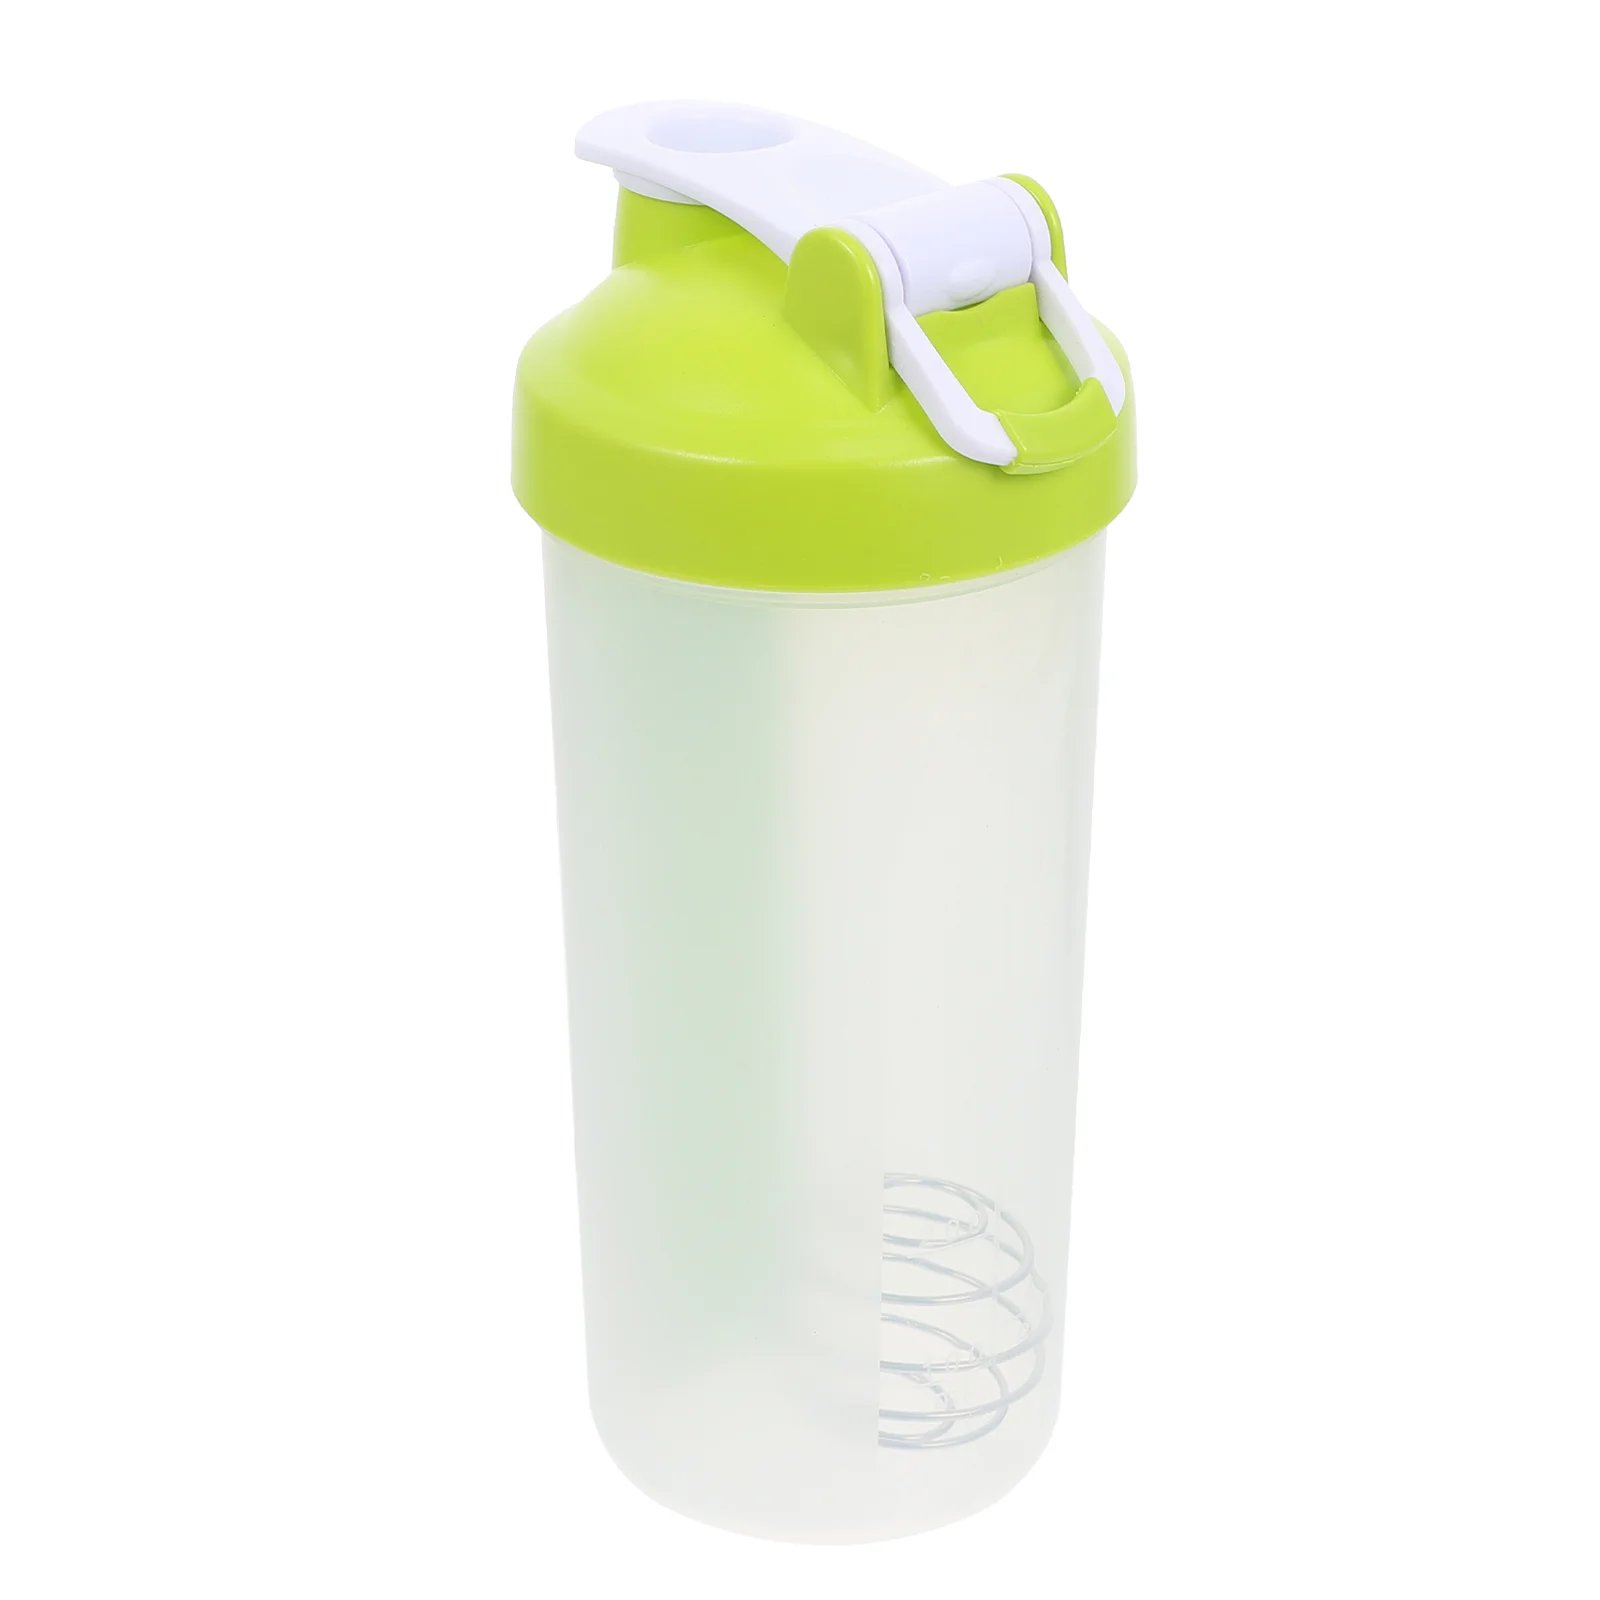 https://ae01.alicdn.com/kf/Sec8134afca3e41a1ada7f2cc7eca06282/Bottle-Shaker-Water-Protein-Gym-Bottles-Case-Drink-Mug-Workout-Drinking-Supplement-Kettle-Holder-Box-Storage.jpg